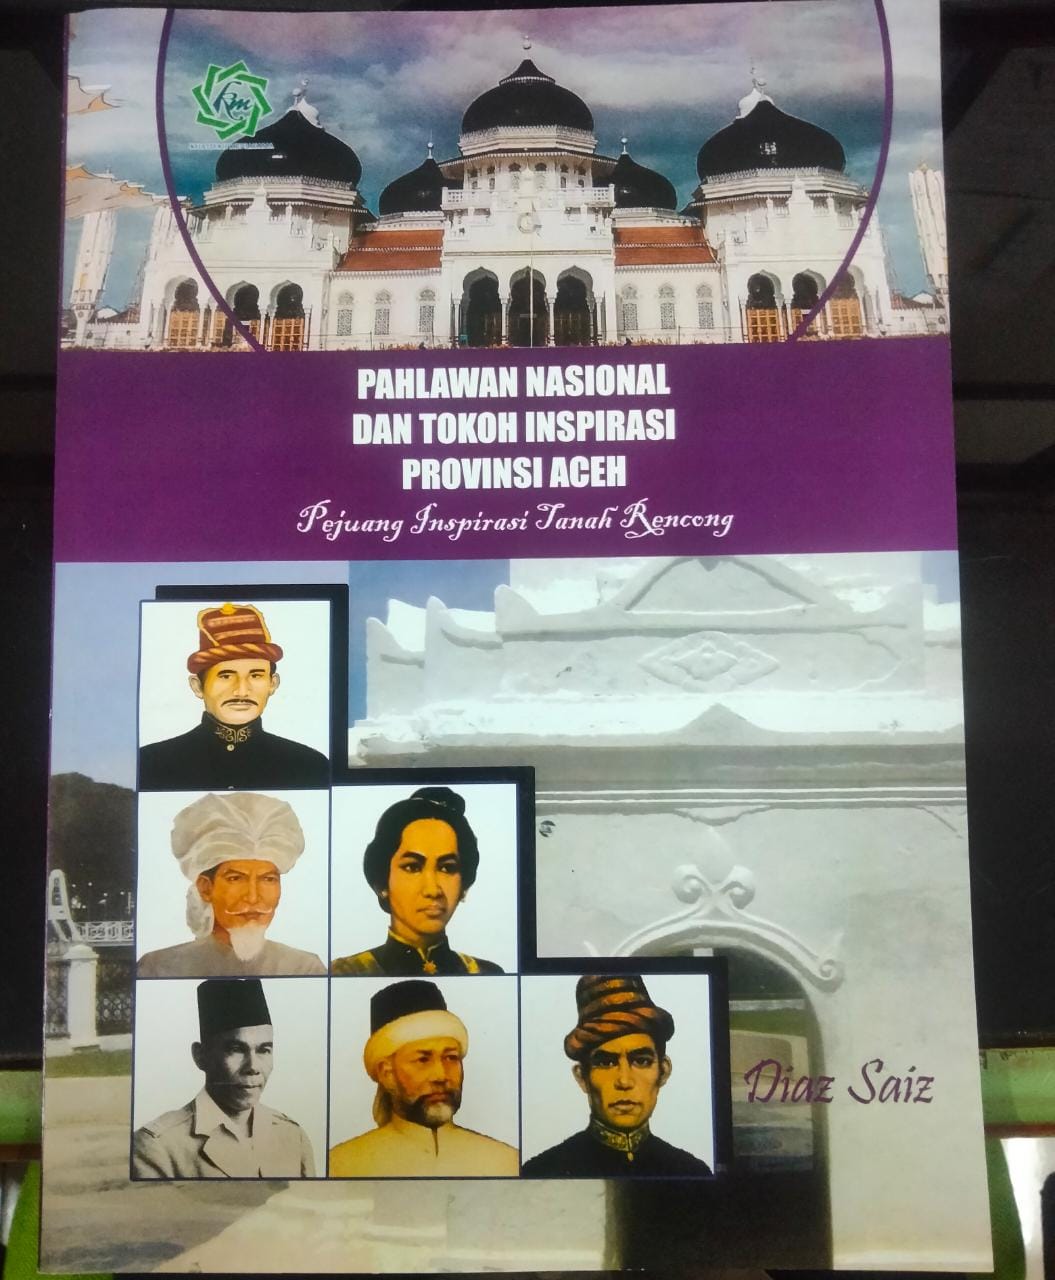 Pahlawan Nasional dan tokoh inspirasi Provinsi Aceh :  "pejuang inspirasi tanah rencong"